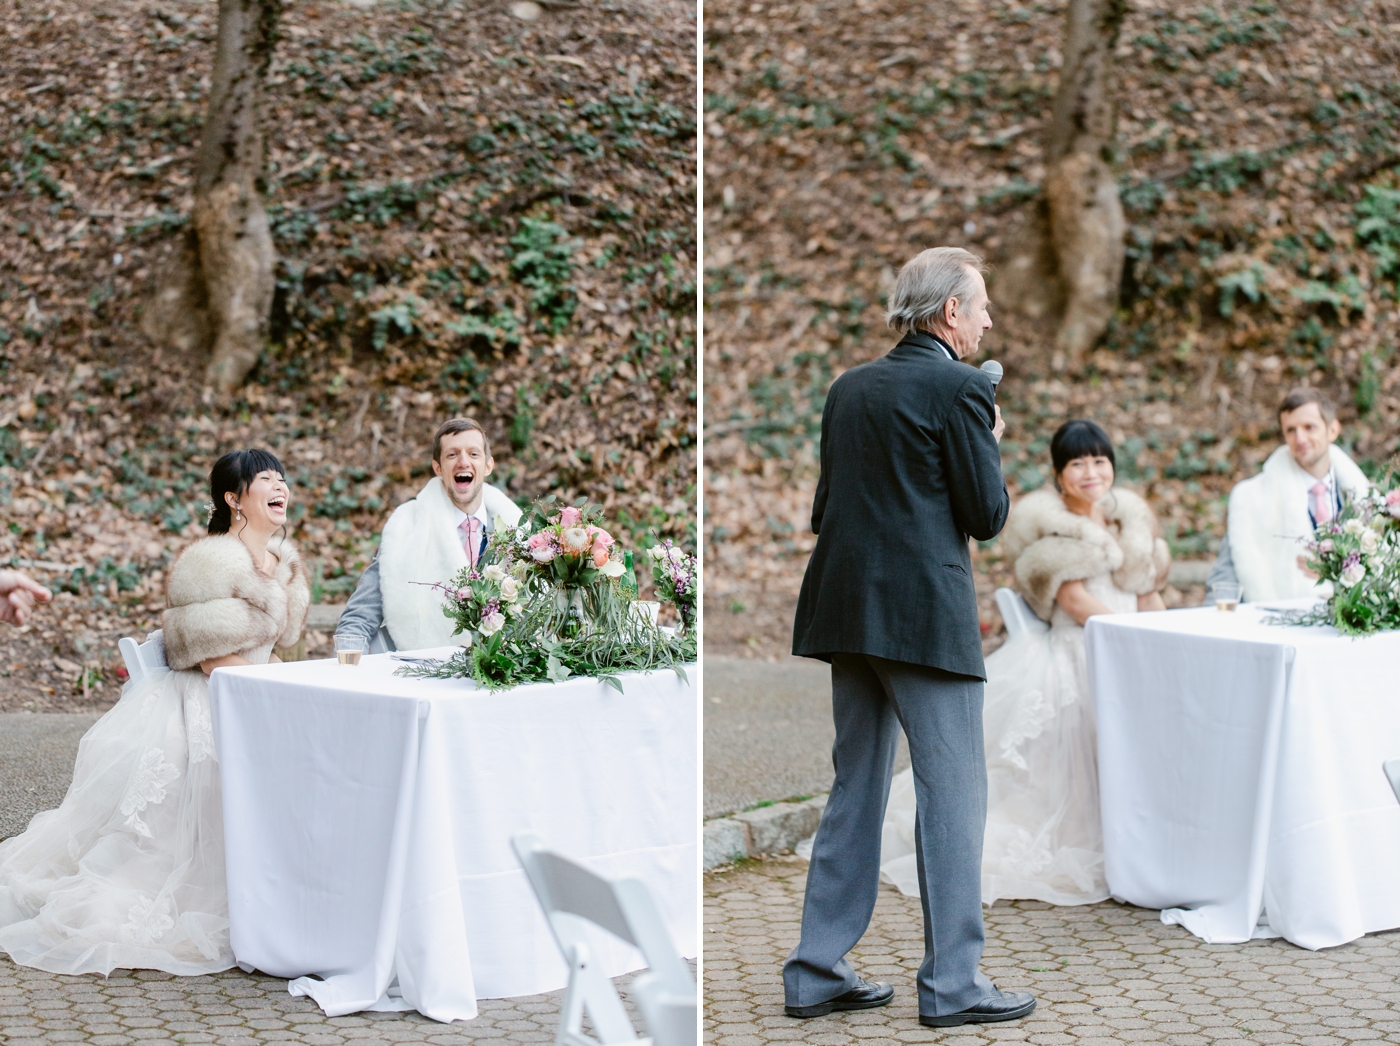 Outdoor wedding reception at Cator Woolford Gardens in Atlanta